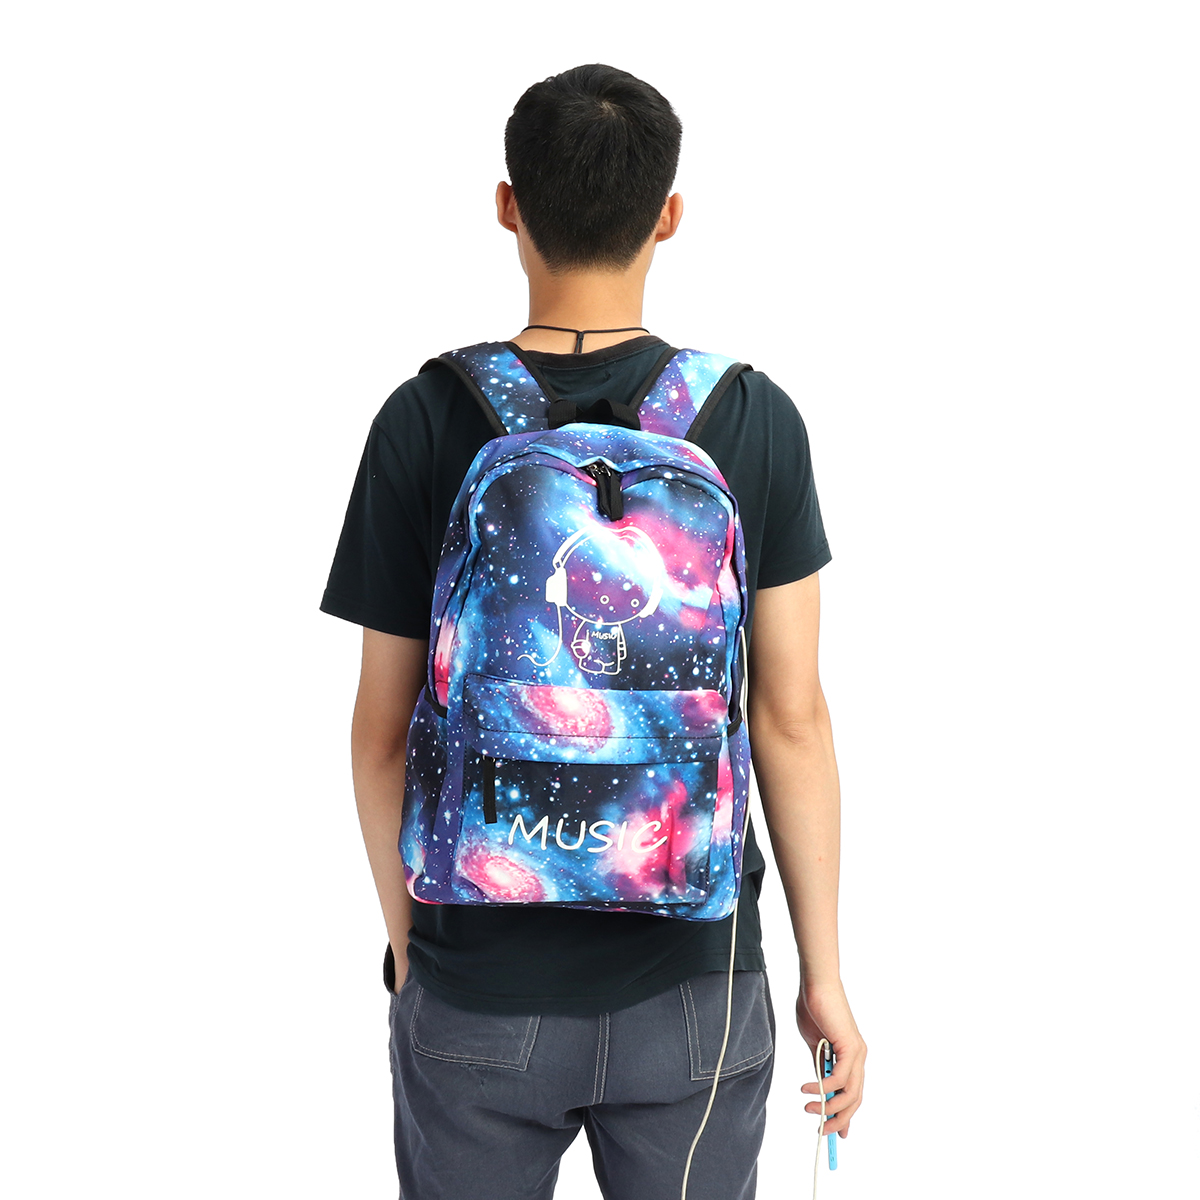 Outdoor-Night-Luminous-Backpack-USB-Oxford-School-Bag-Shoulder-Bag-Waterproof-Handbag-1373775-8